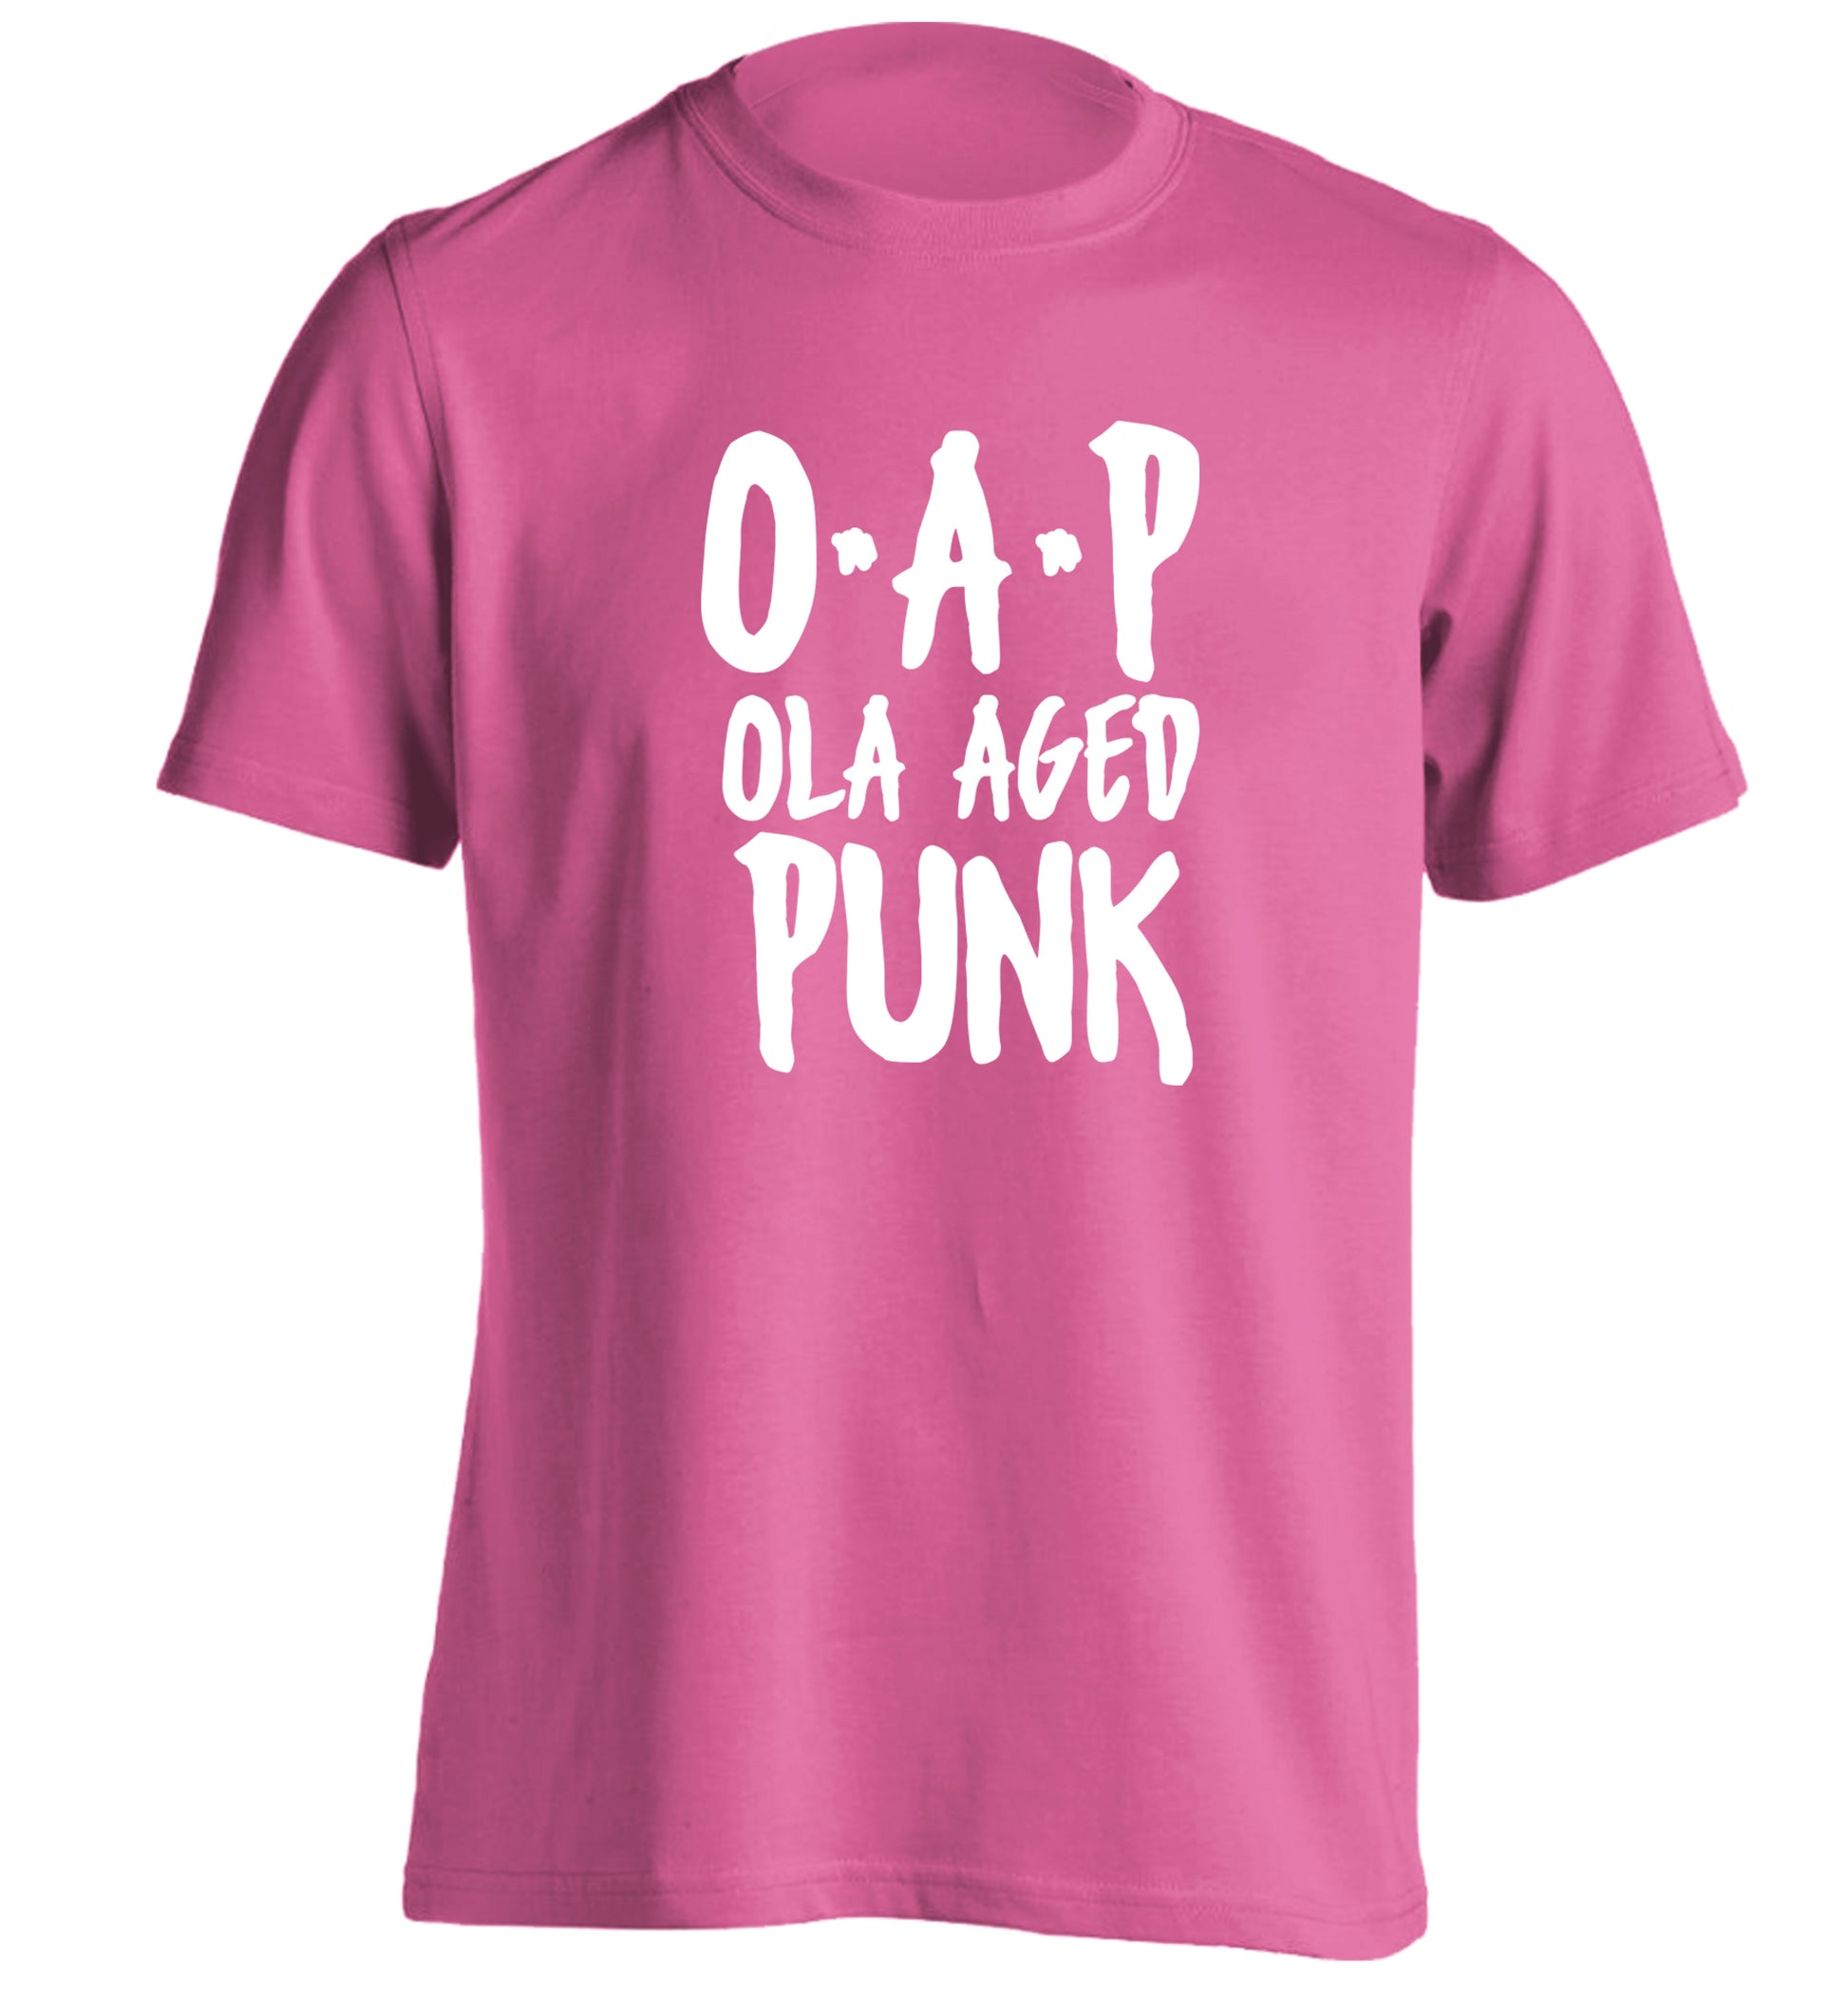 O.A.P Old Aged Punk adults unisex pink Tshirt 2XL